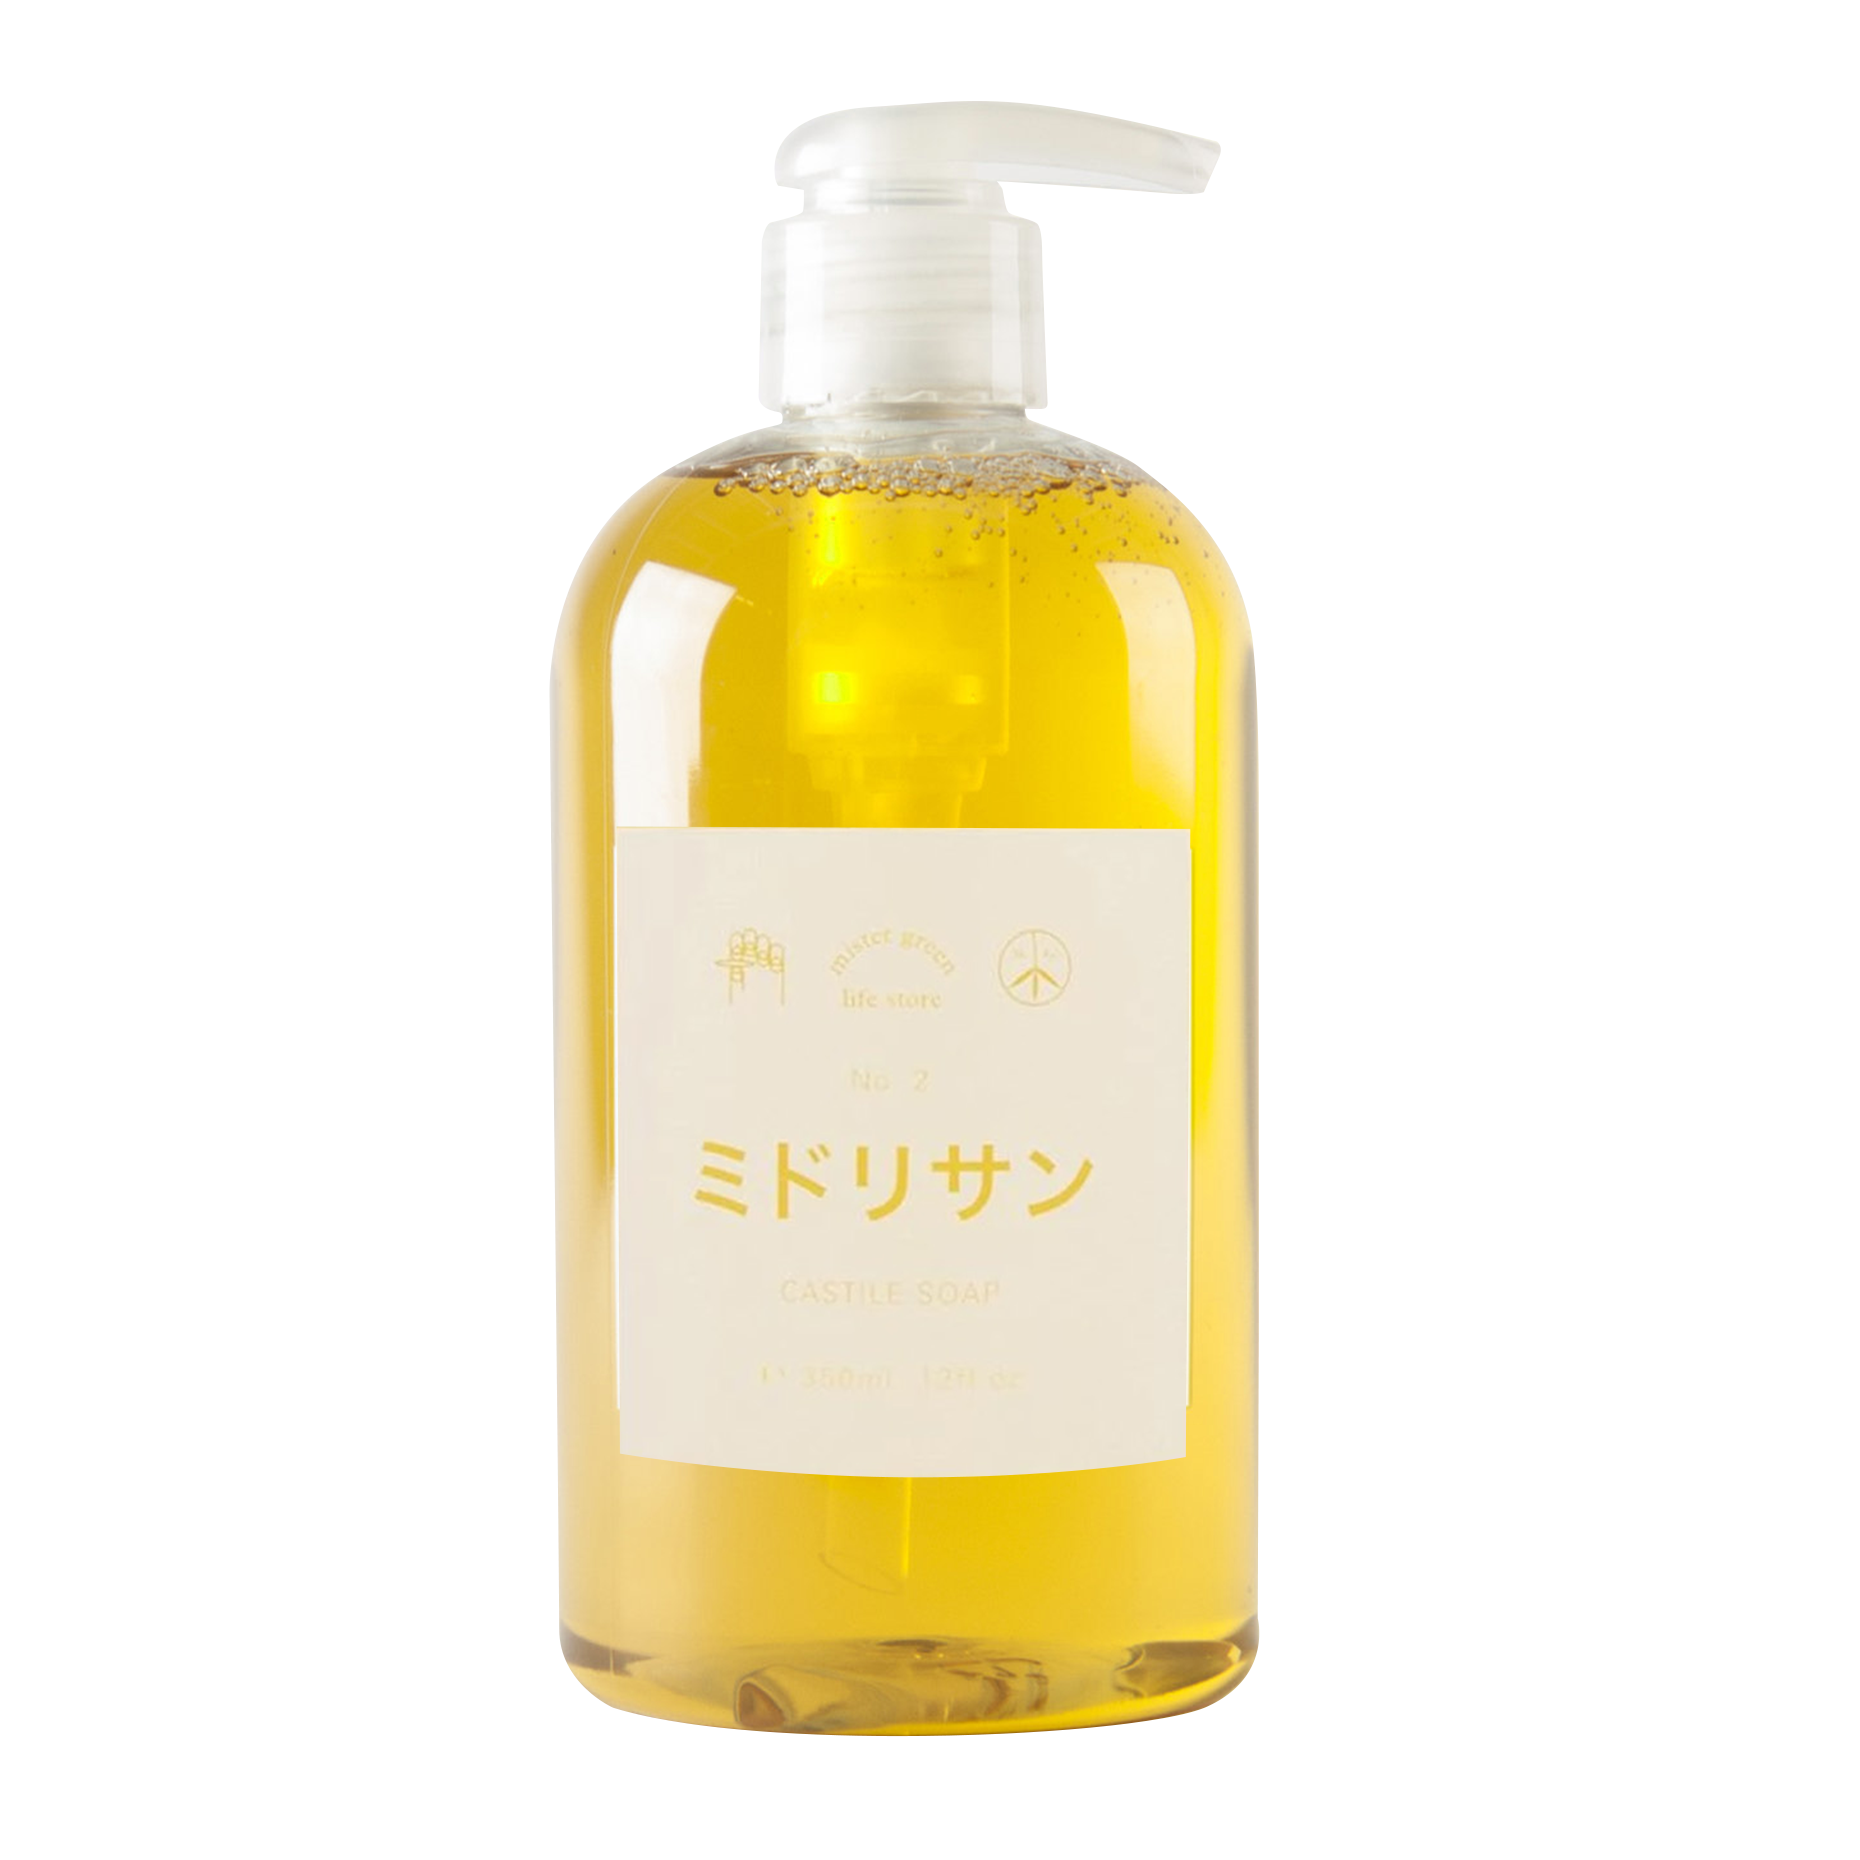 Fragrance 2: Midori-San Castille Soap